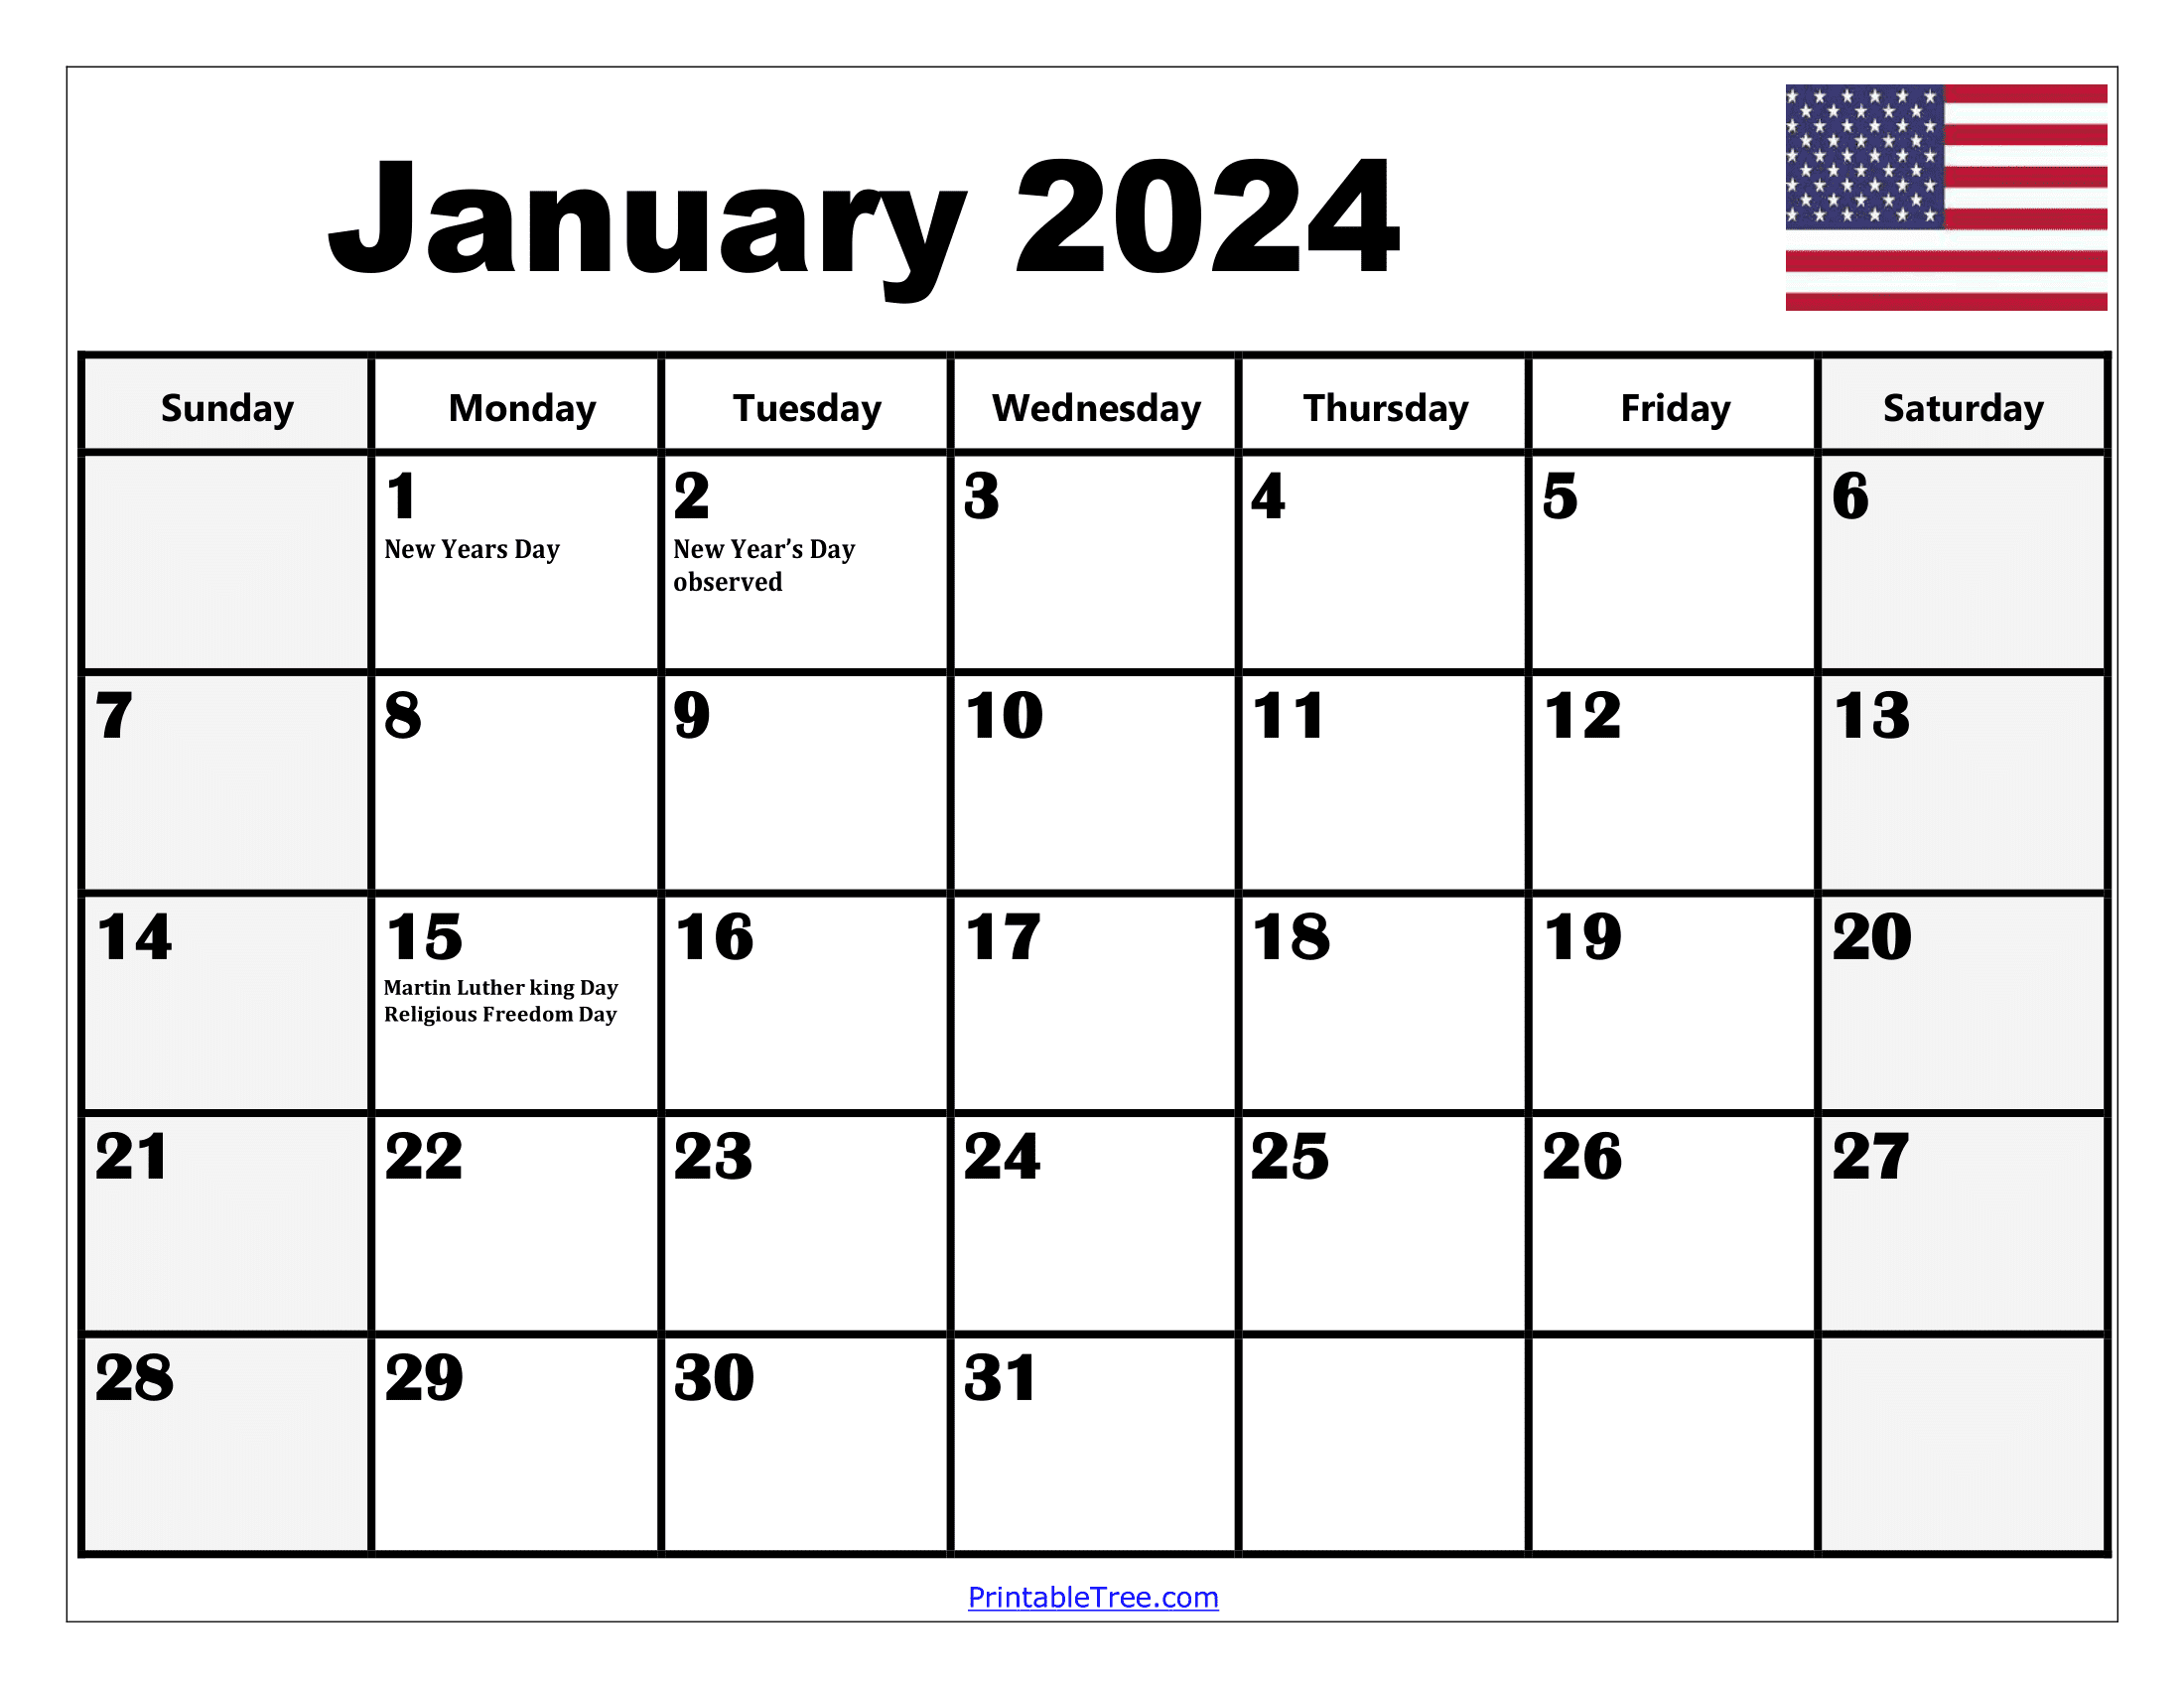 January 2024 Calendar Printable Pdf Template With Holidays for January 2024 Calendar Free Printable With Holidays